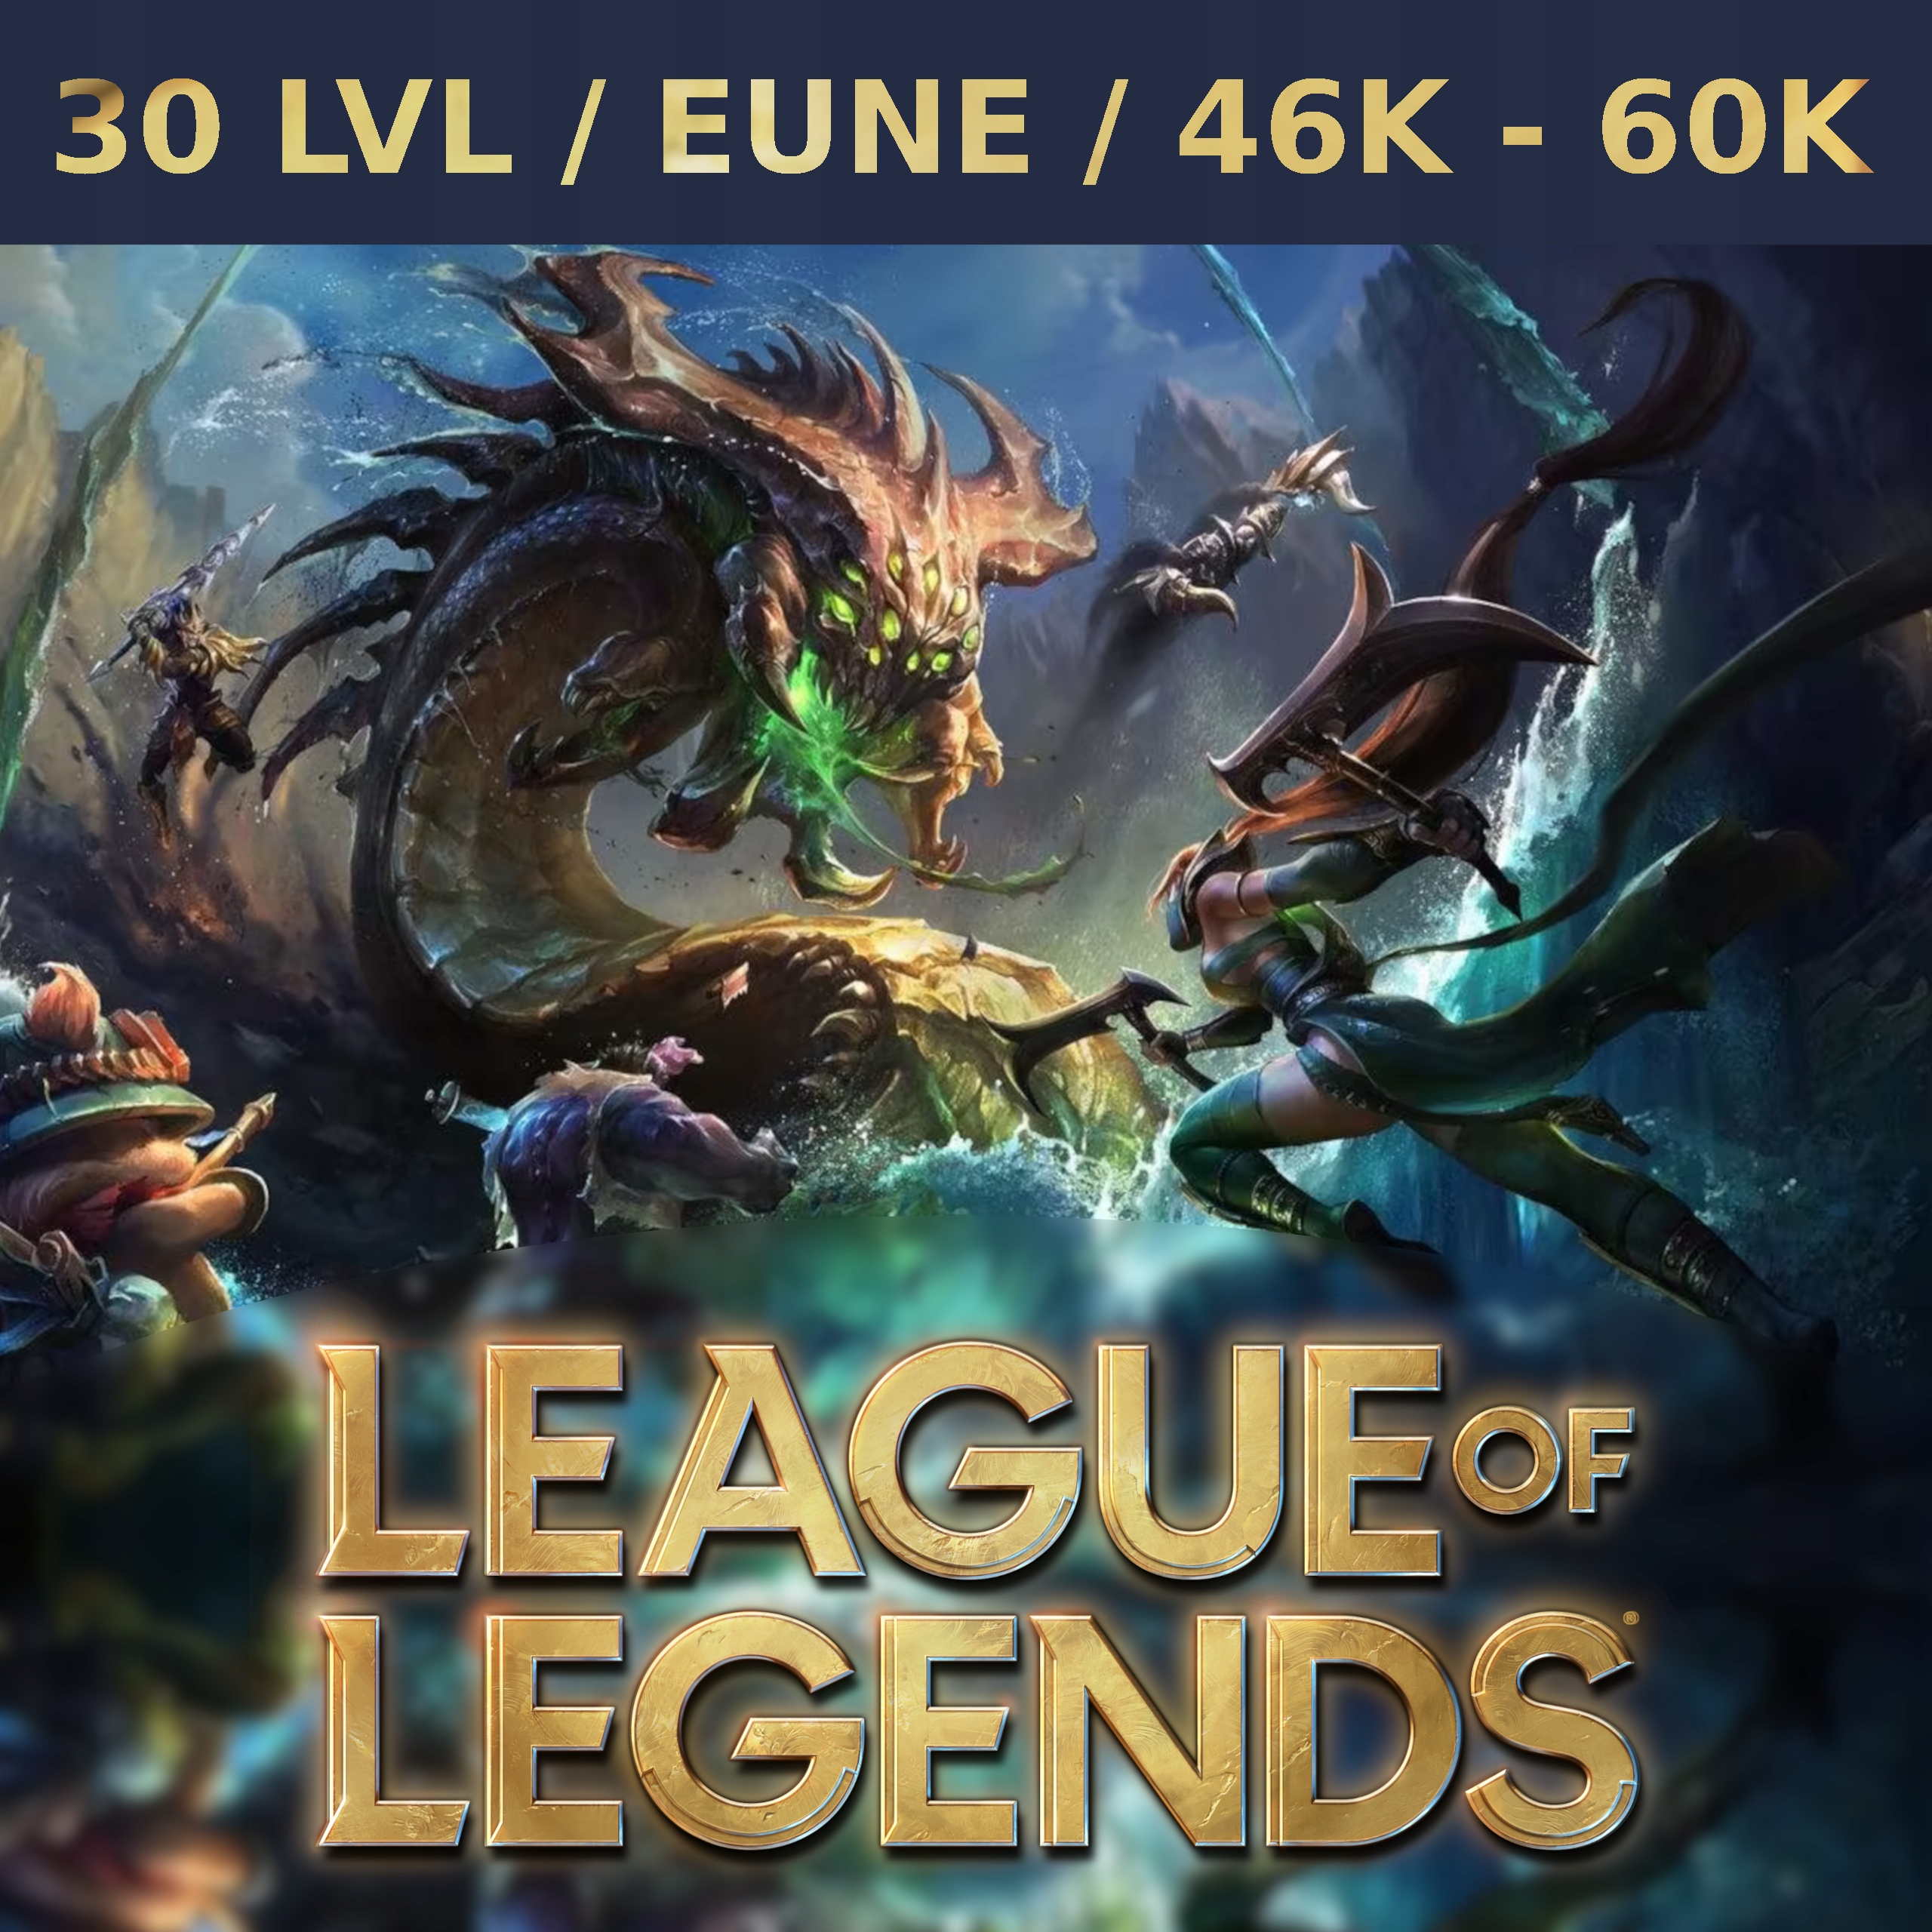 EUW EUNE League of Legends Account LOL Smurf 40K 50K 60K BE Level 30  Unranked